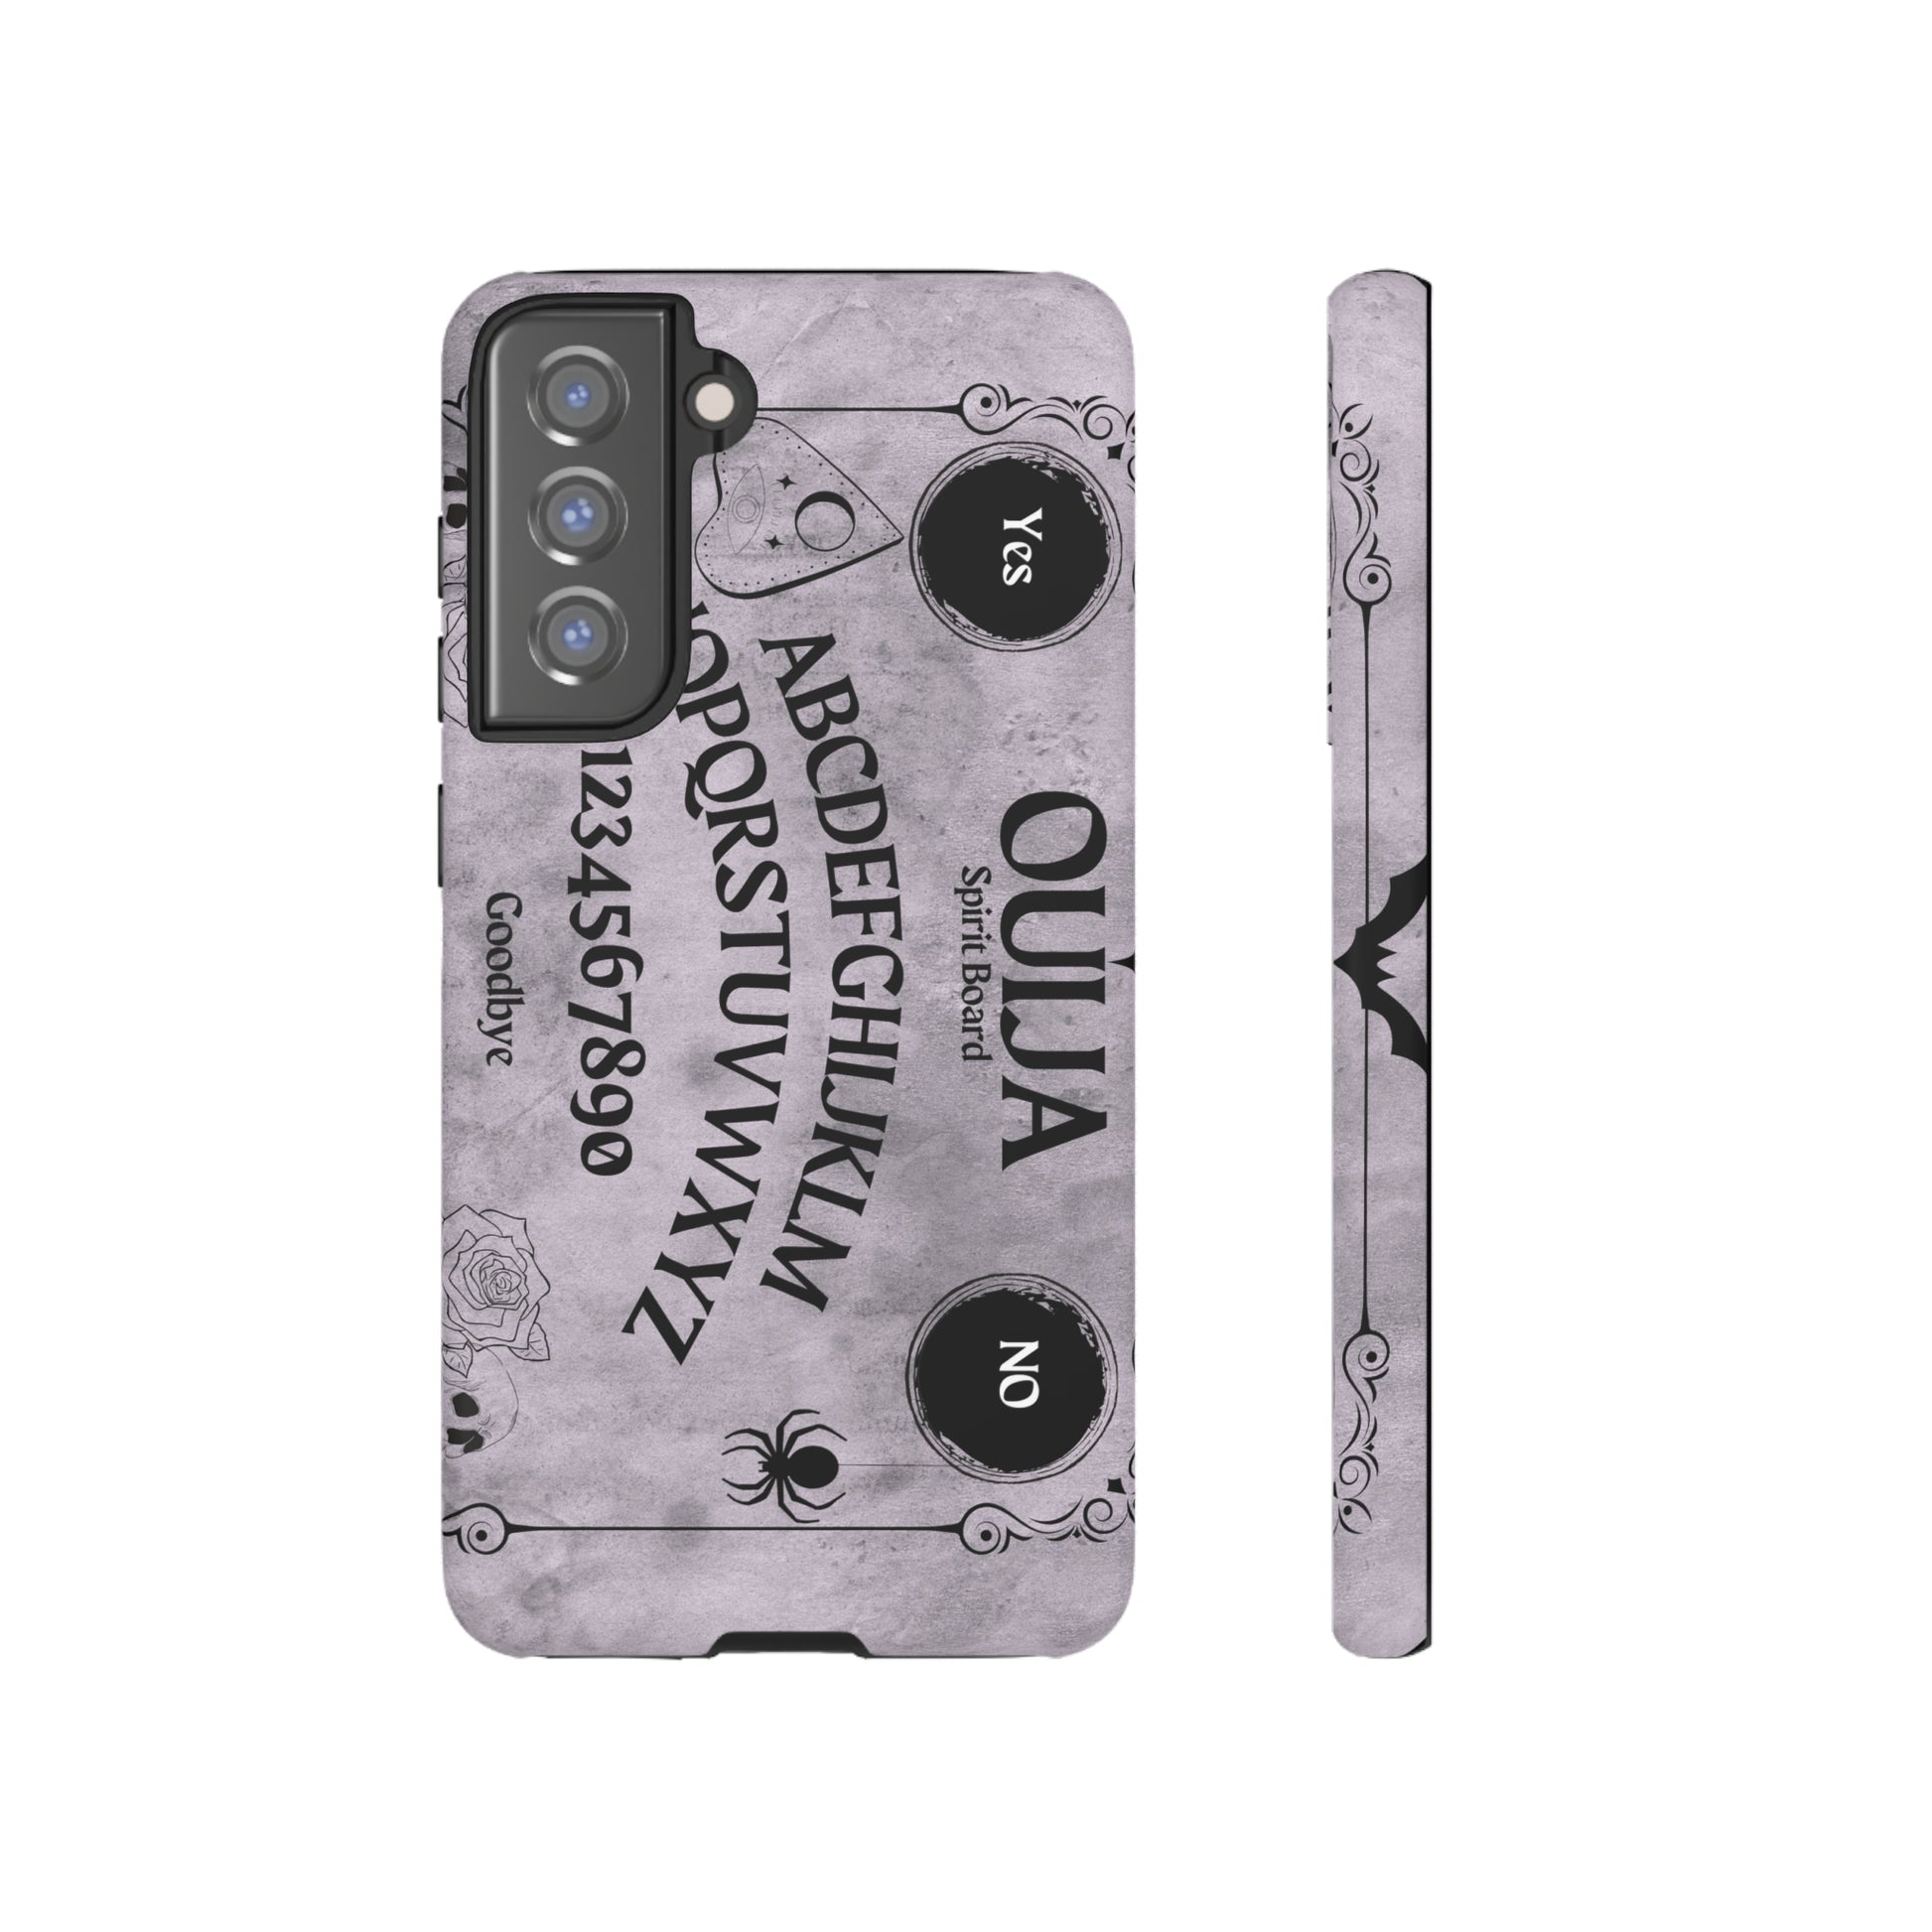 Ouija Board Tough Phone Cases For Samsung iPhone GooglePhone CaseVTZdesignsSamsung Galaxy S21 FEMatteAccessoriesGlossyhalloween